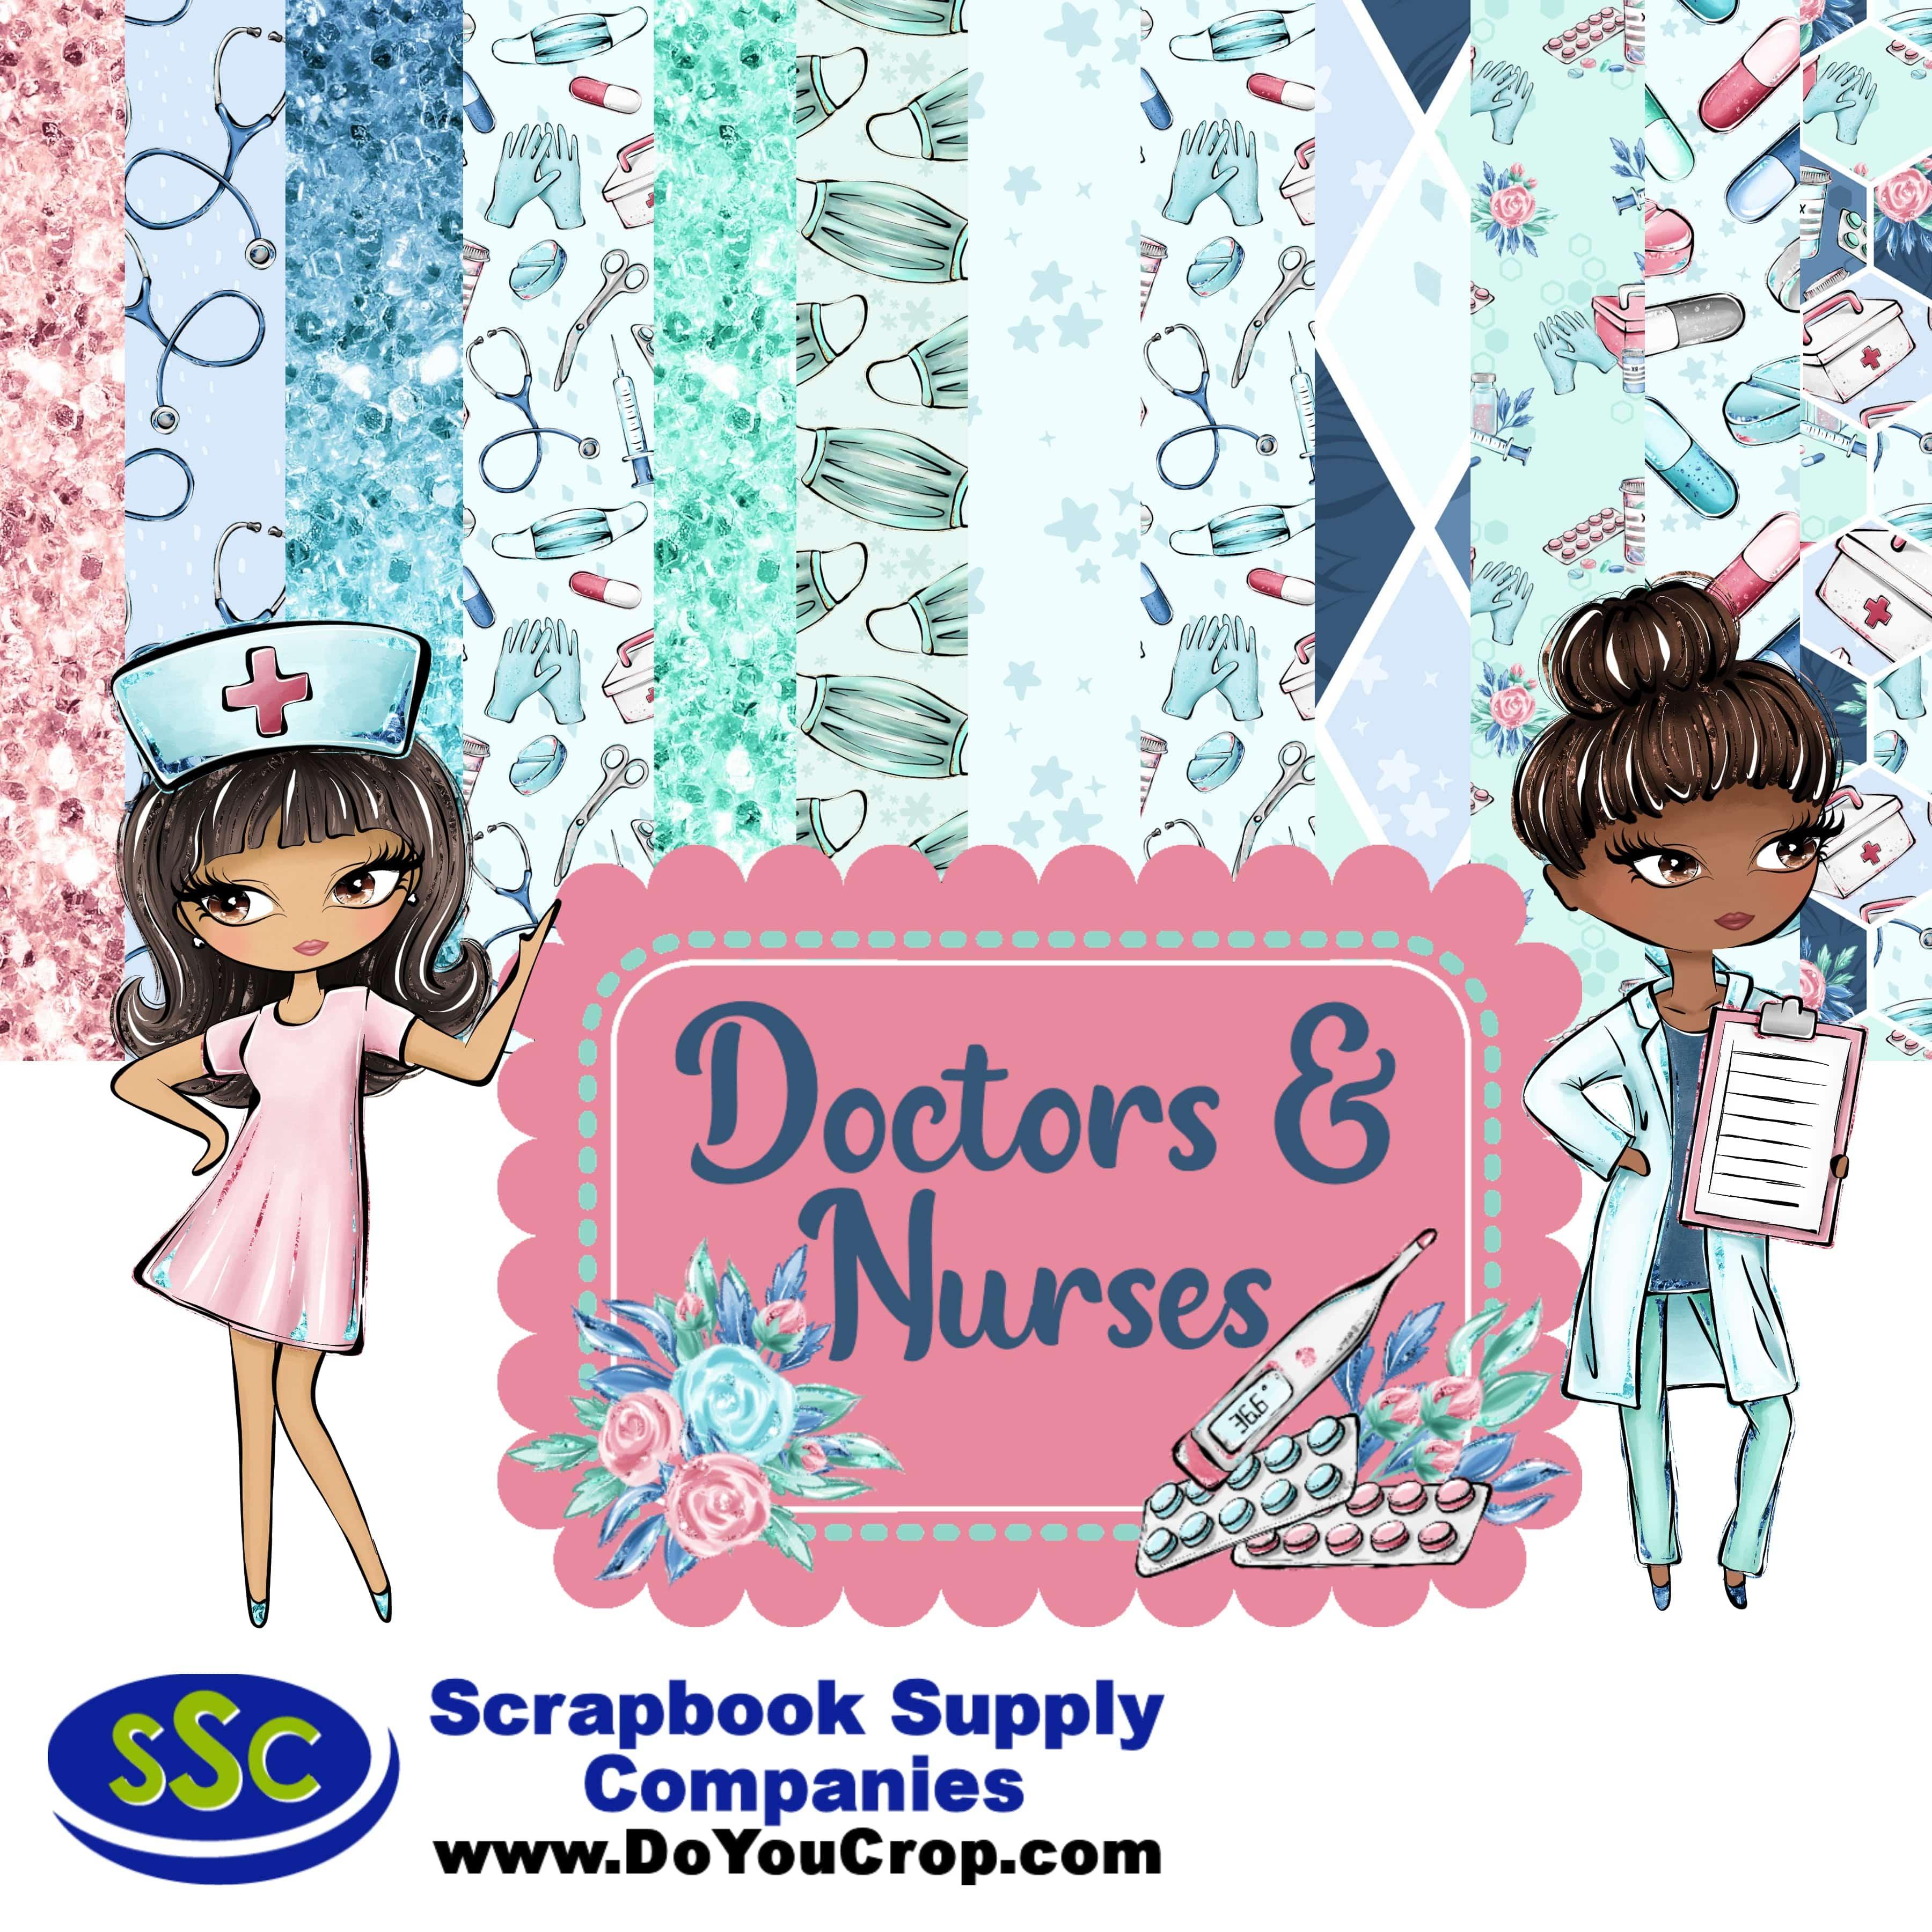 Phantasia Design's Doctors & Nurses 12 x 12 Scrapbook Paper & Embellishment Kit by SSC Designs - Scrapbook Supply Companies